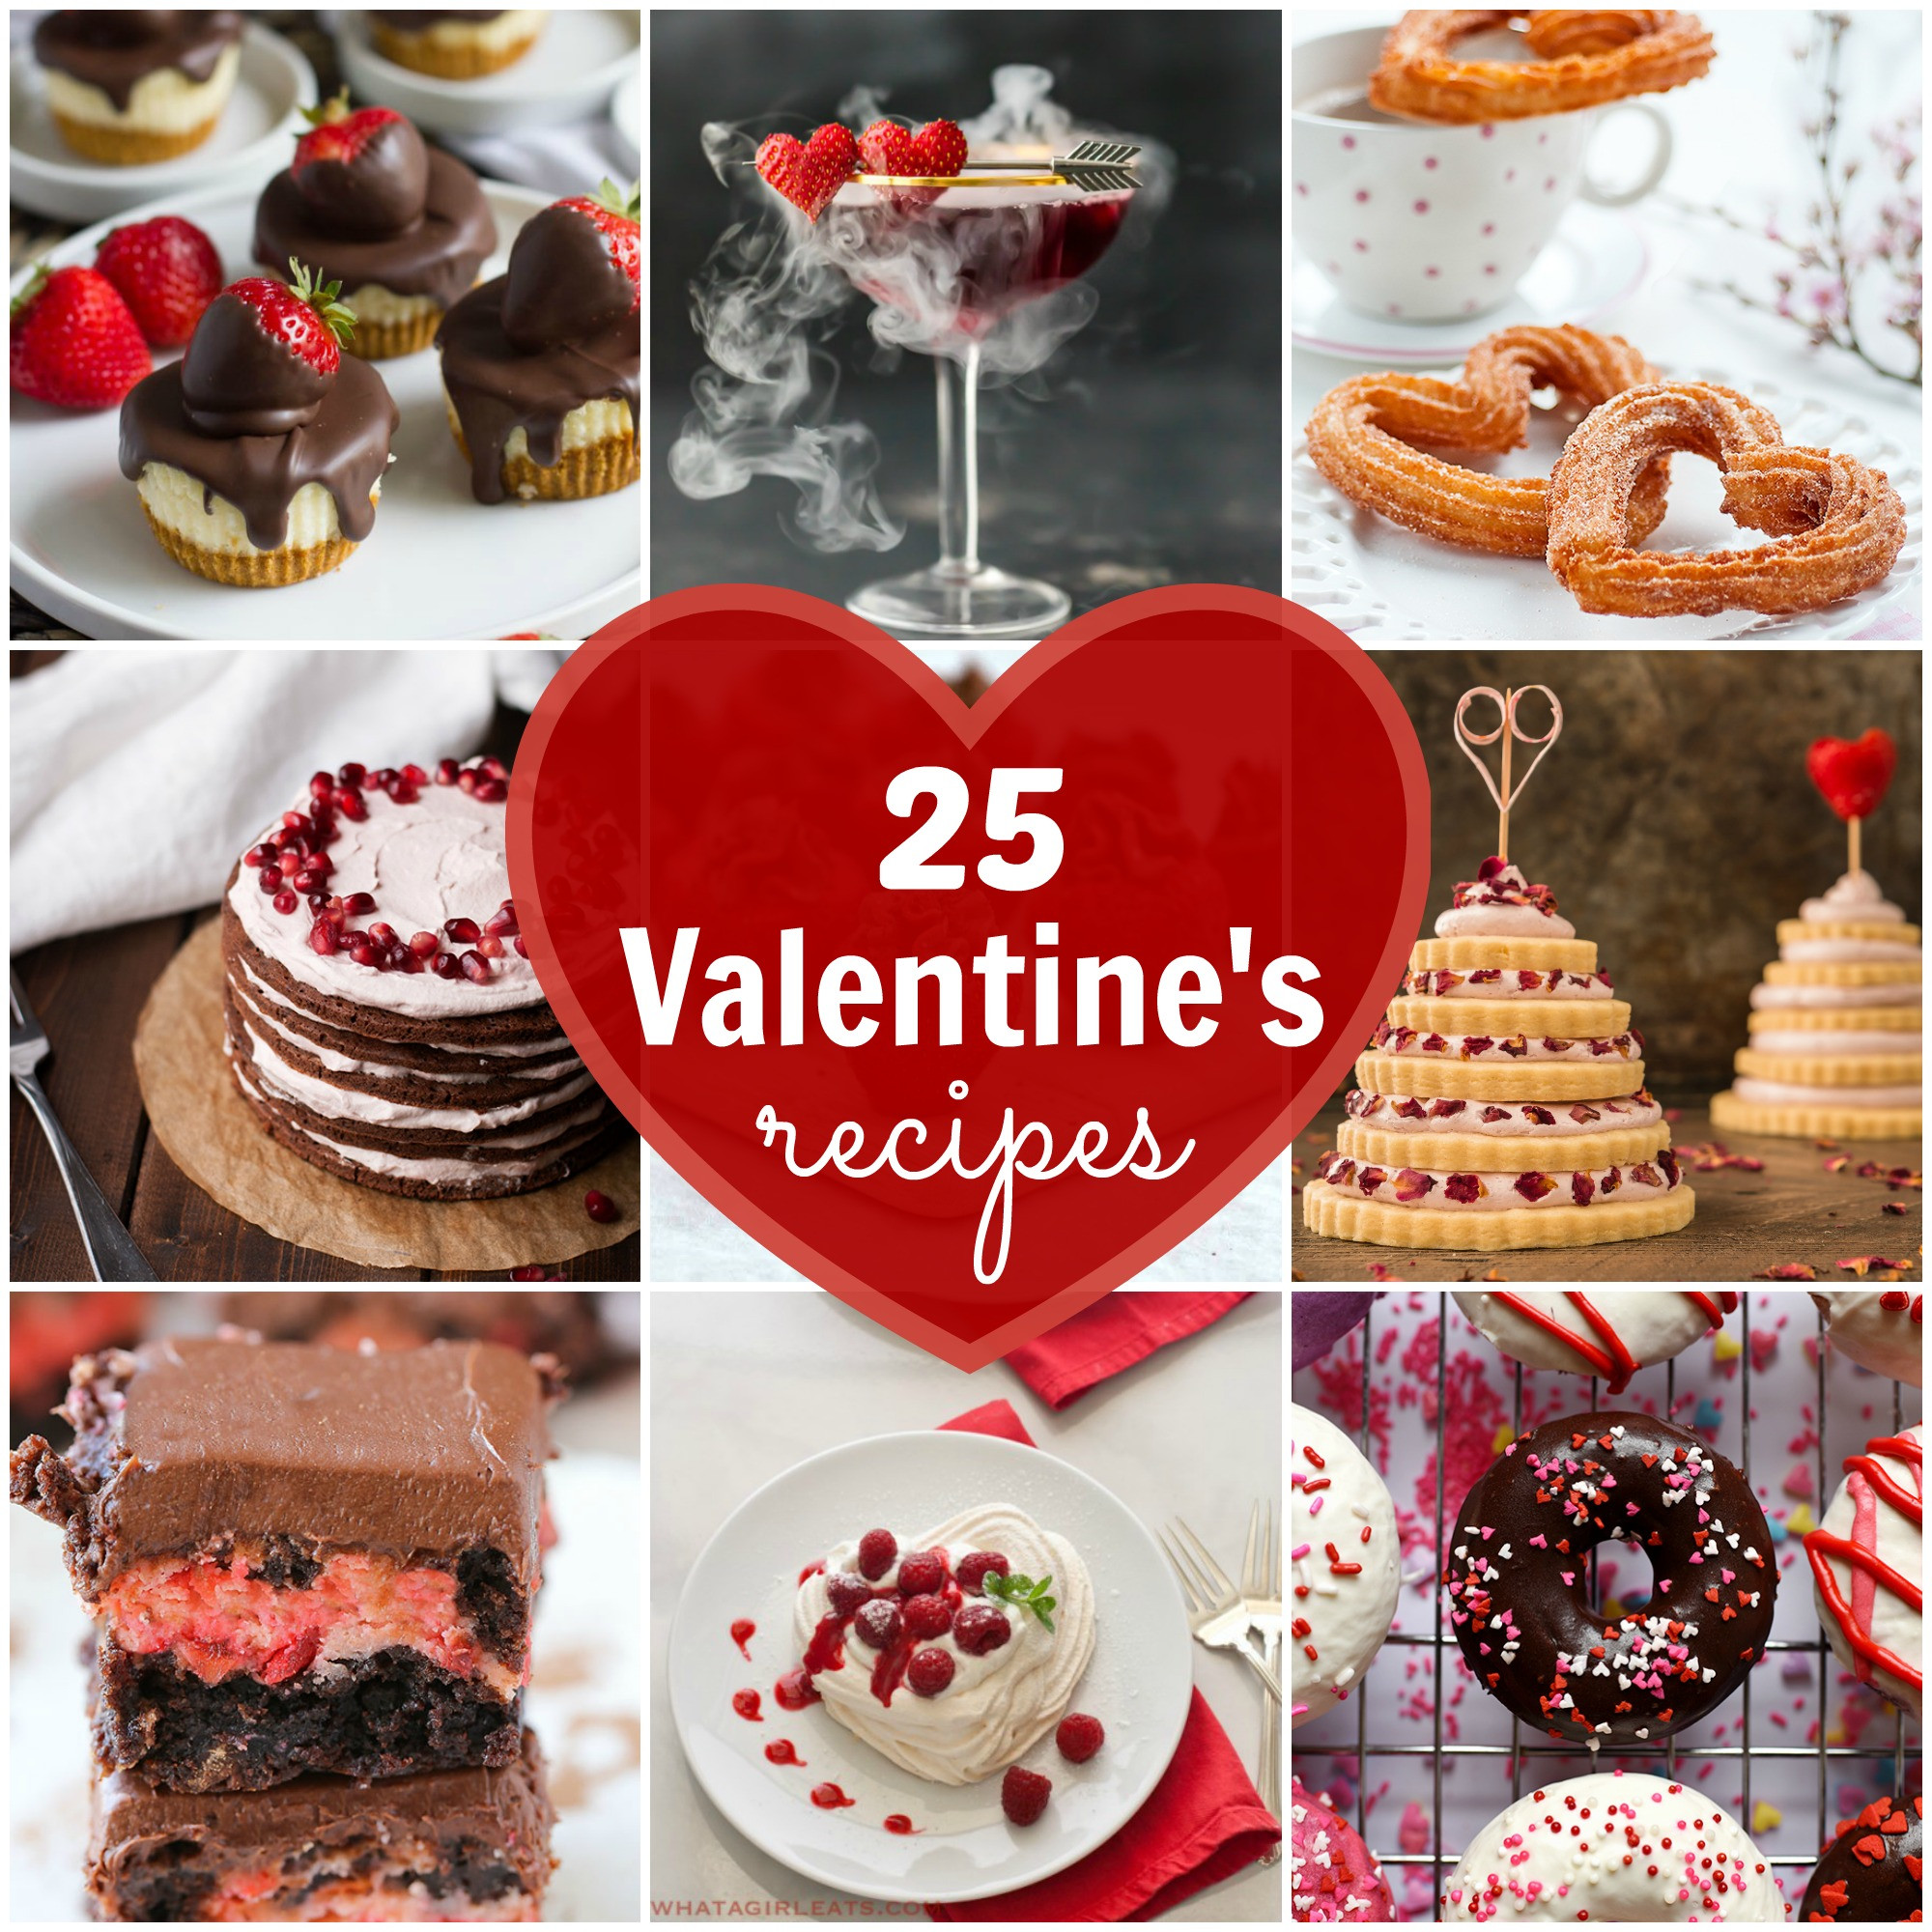 Recipes For Valentine'S Day Desserts
 25 Valentine s Day Dessert And Cocktail Recipes